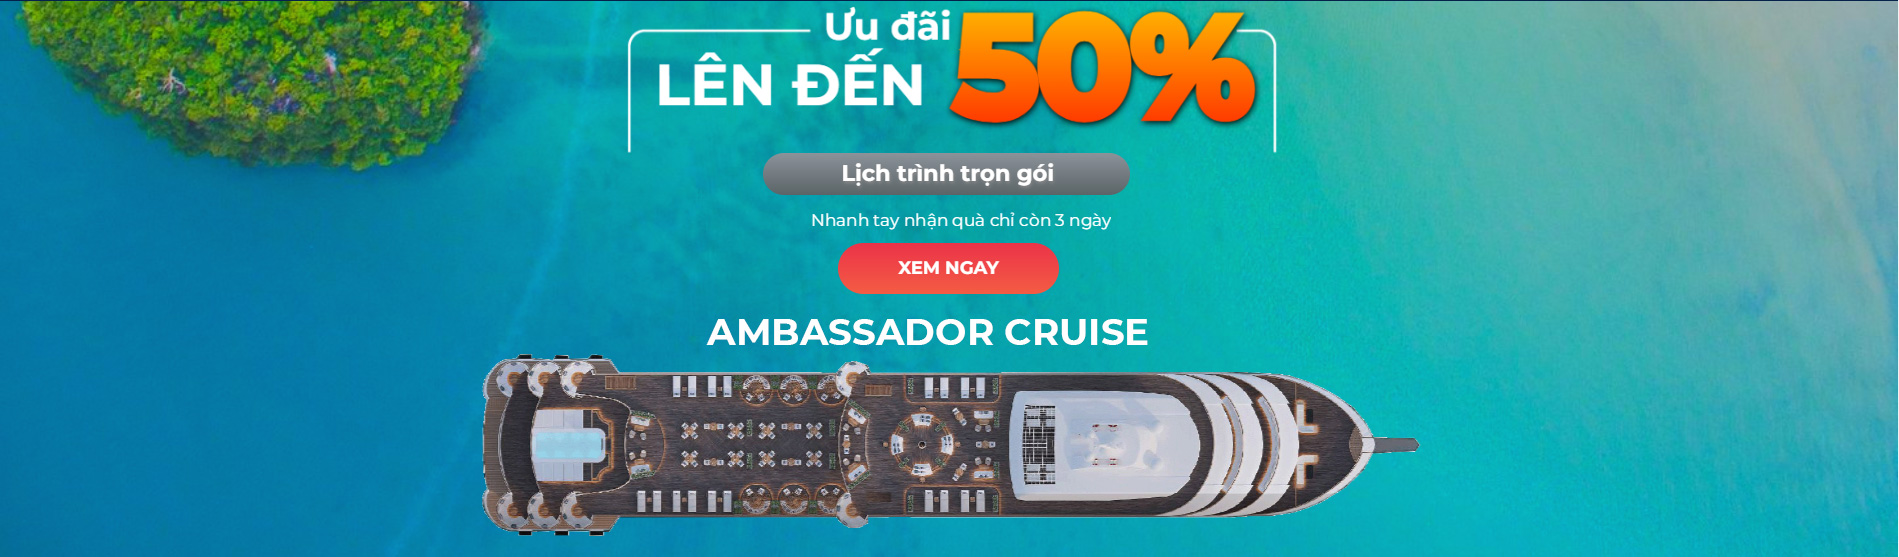 /files/images/CTKM/ambassador-cruise.jpg